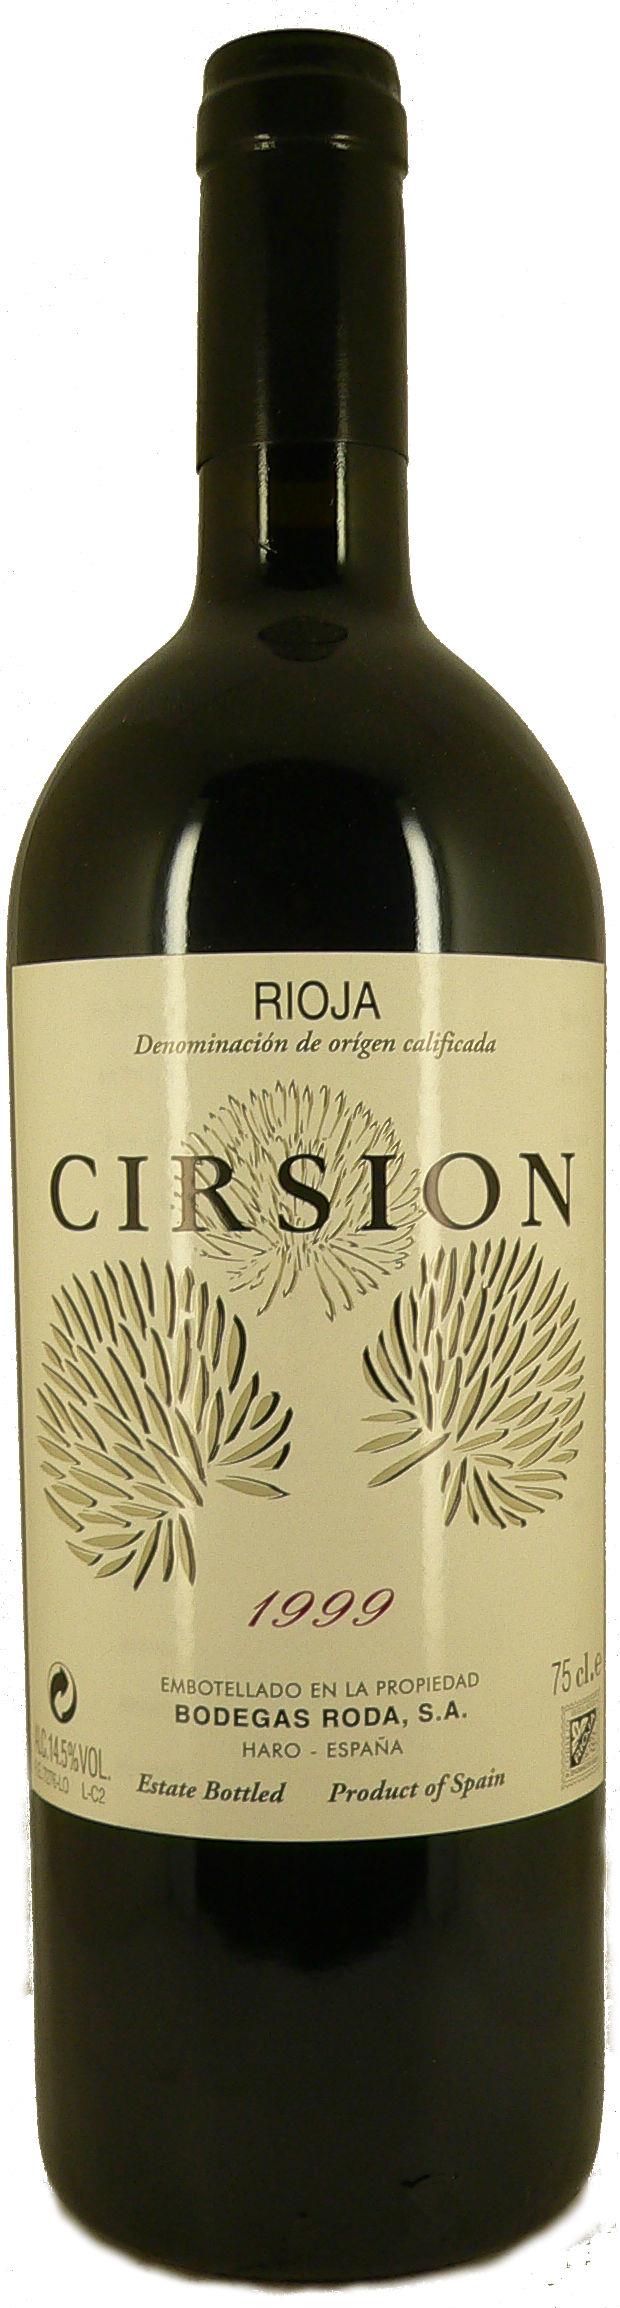 1999 Rioja Cirsion von Bodegas Roda